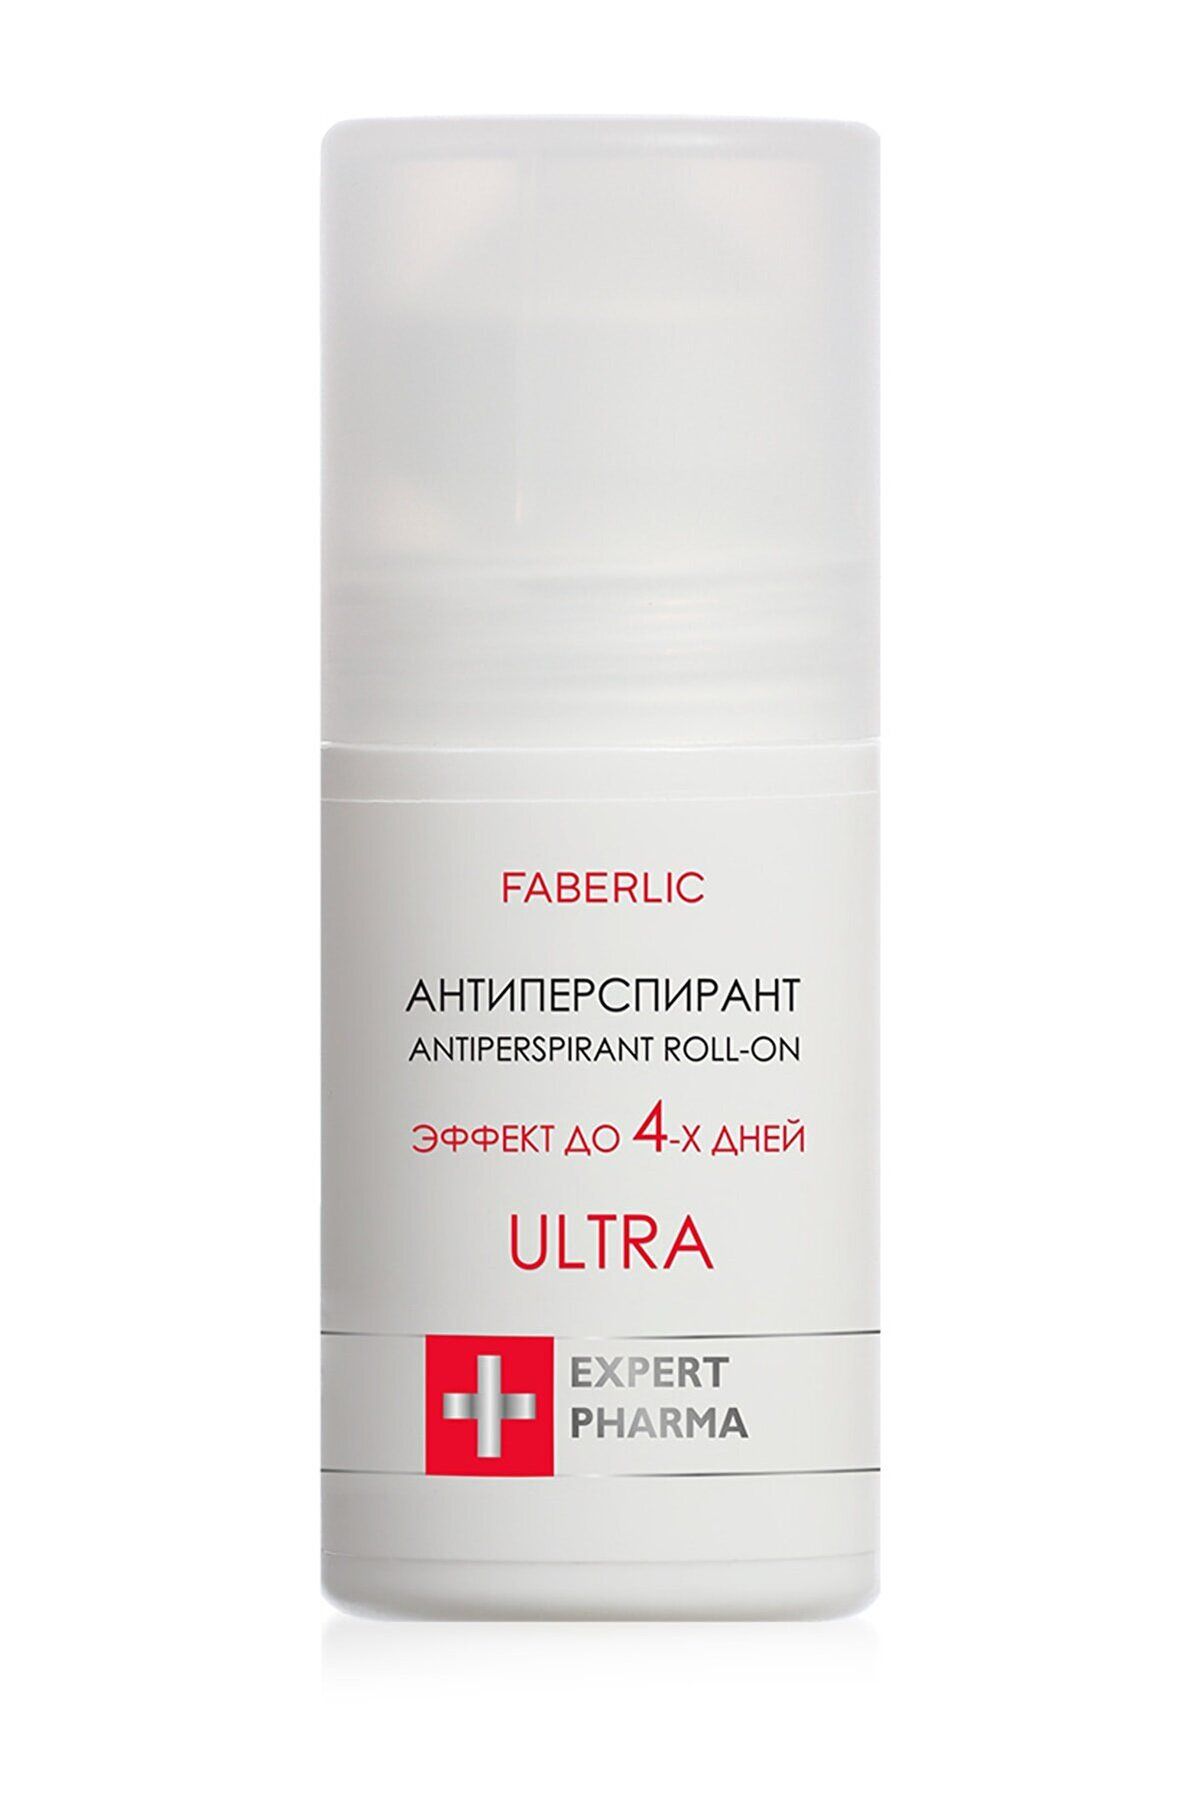 Faberlic Expert Pharma Ultra Antiperspirant Roll-on Deodorant - 50.0 Ml.